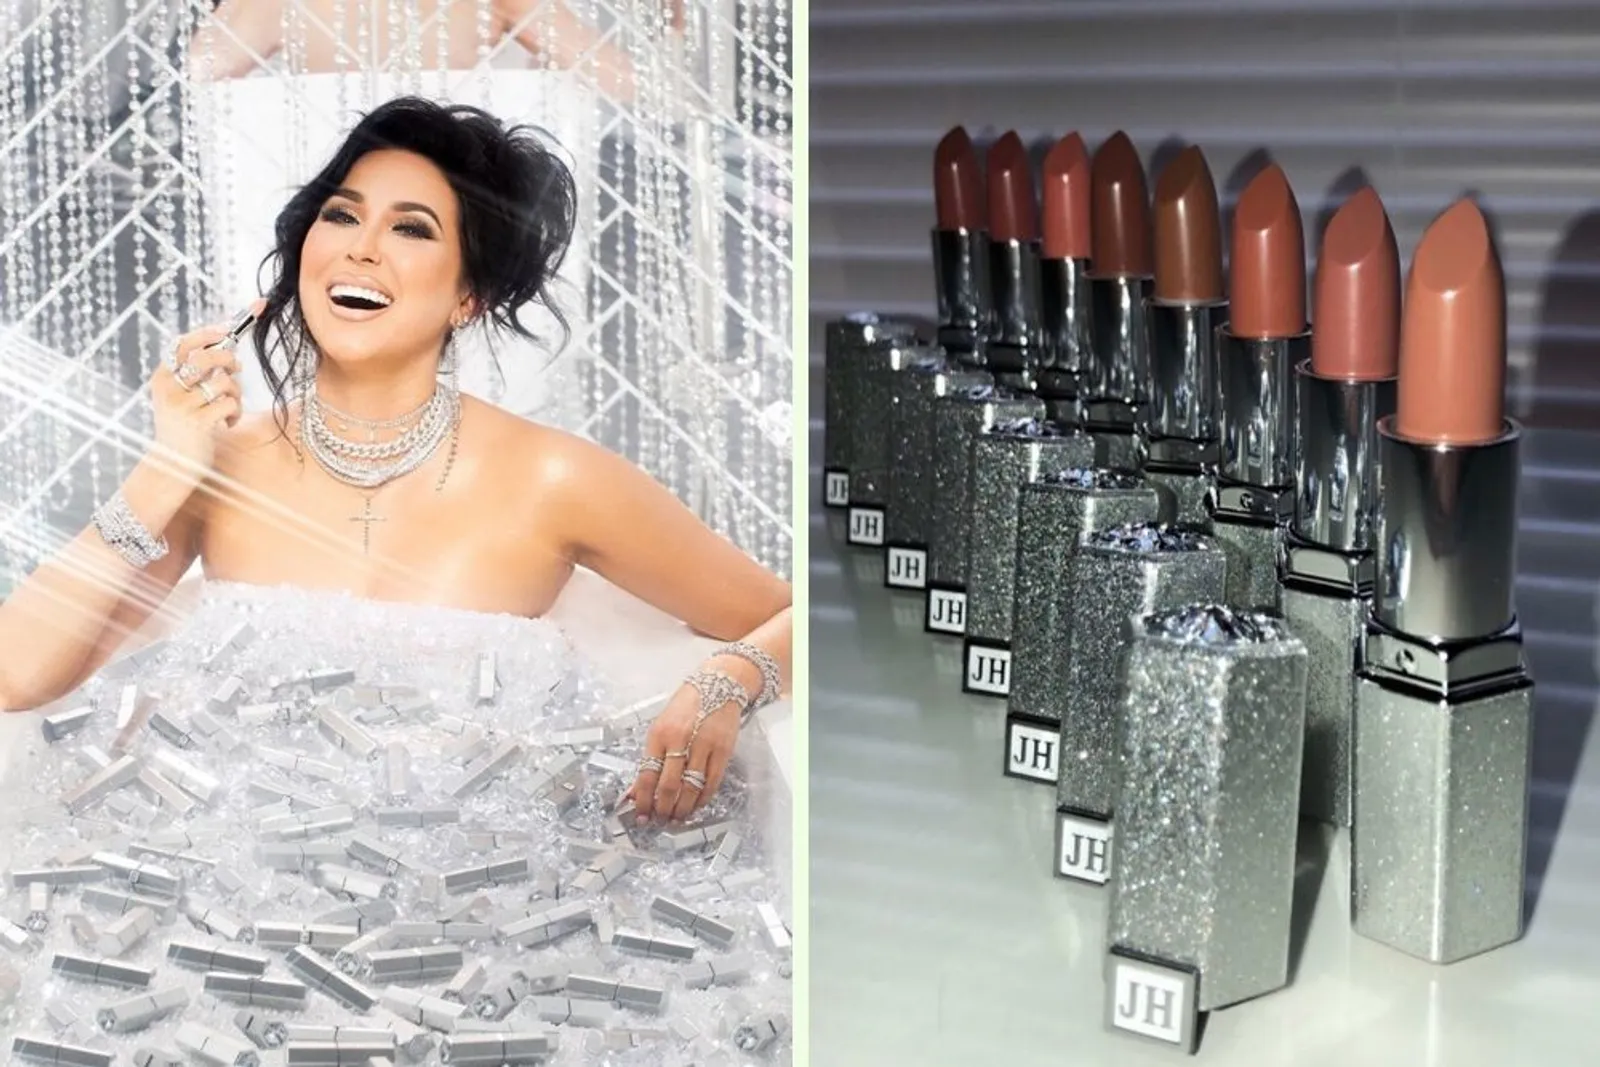 Kontroversi Beauty Influencer Paling Viral Selama 2019